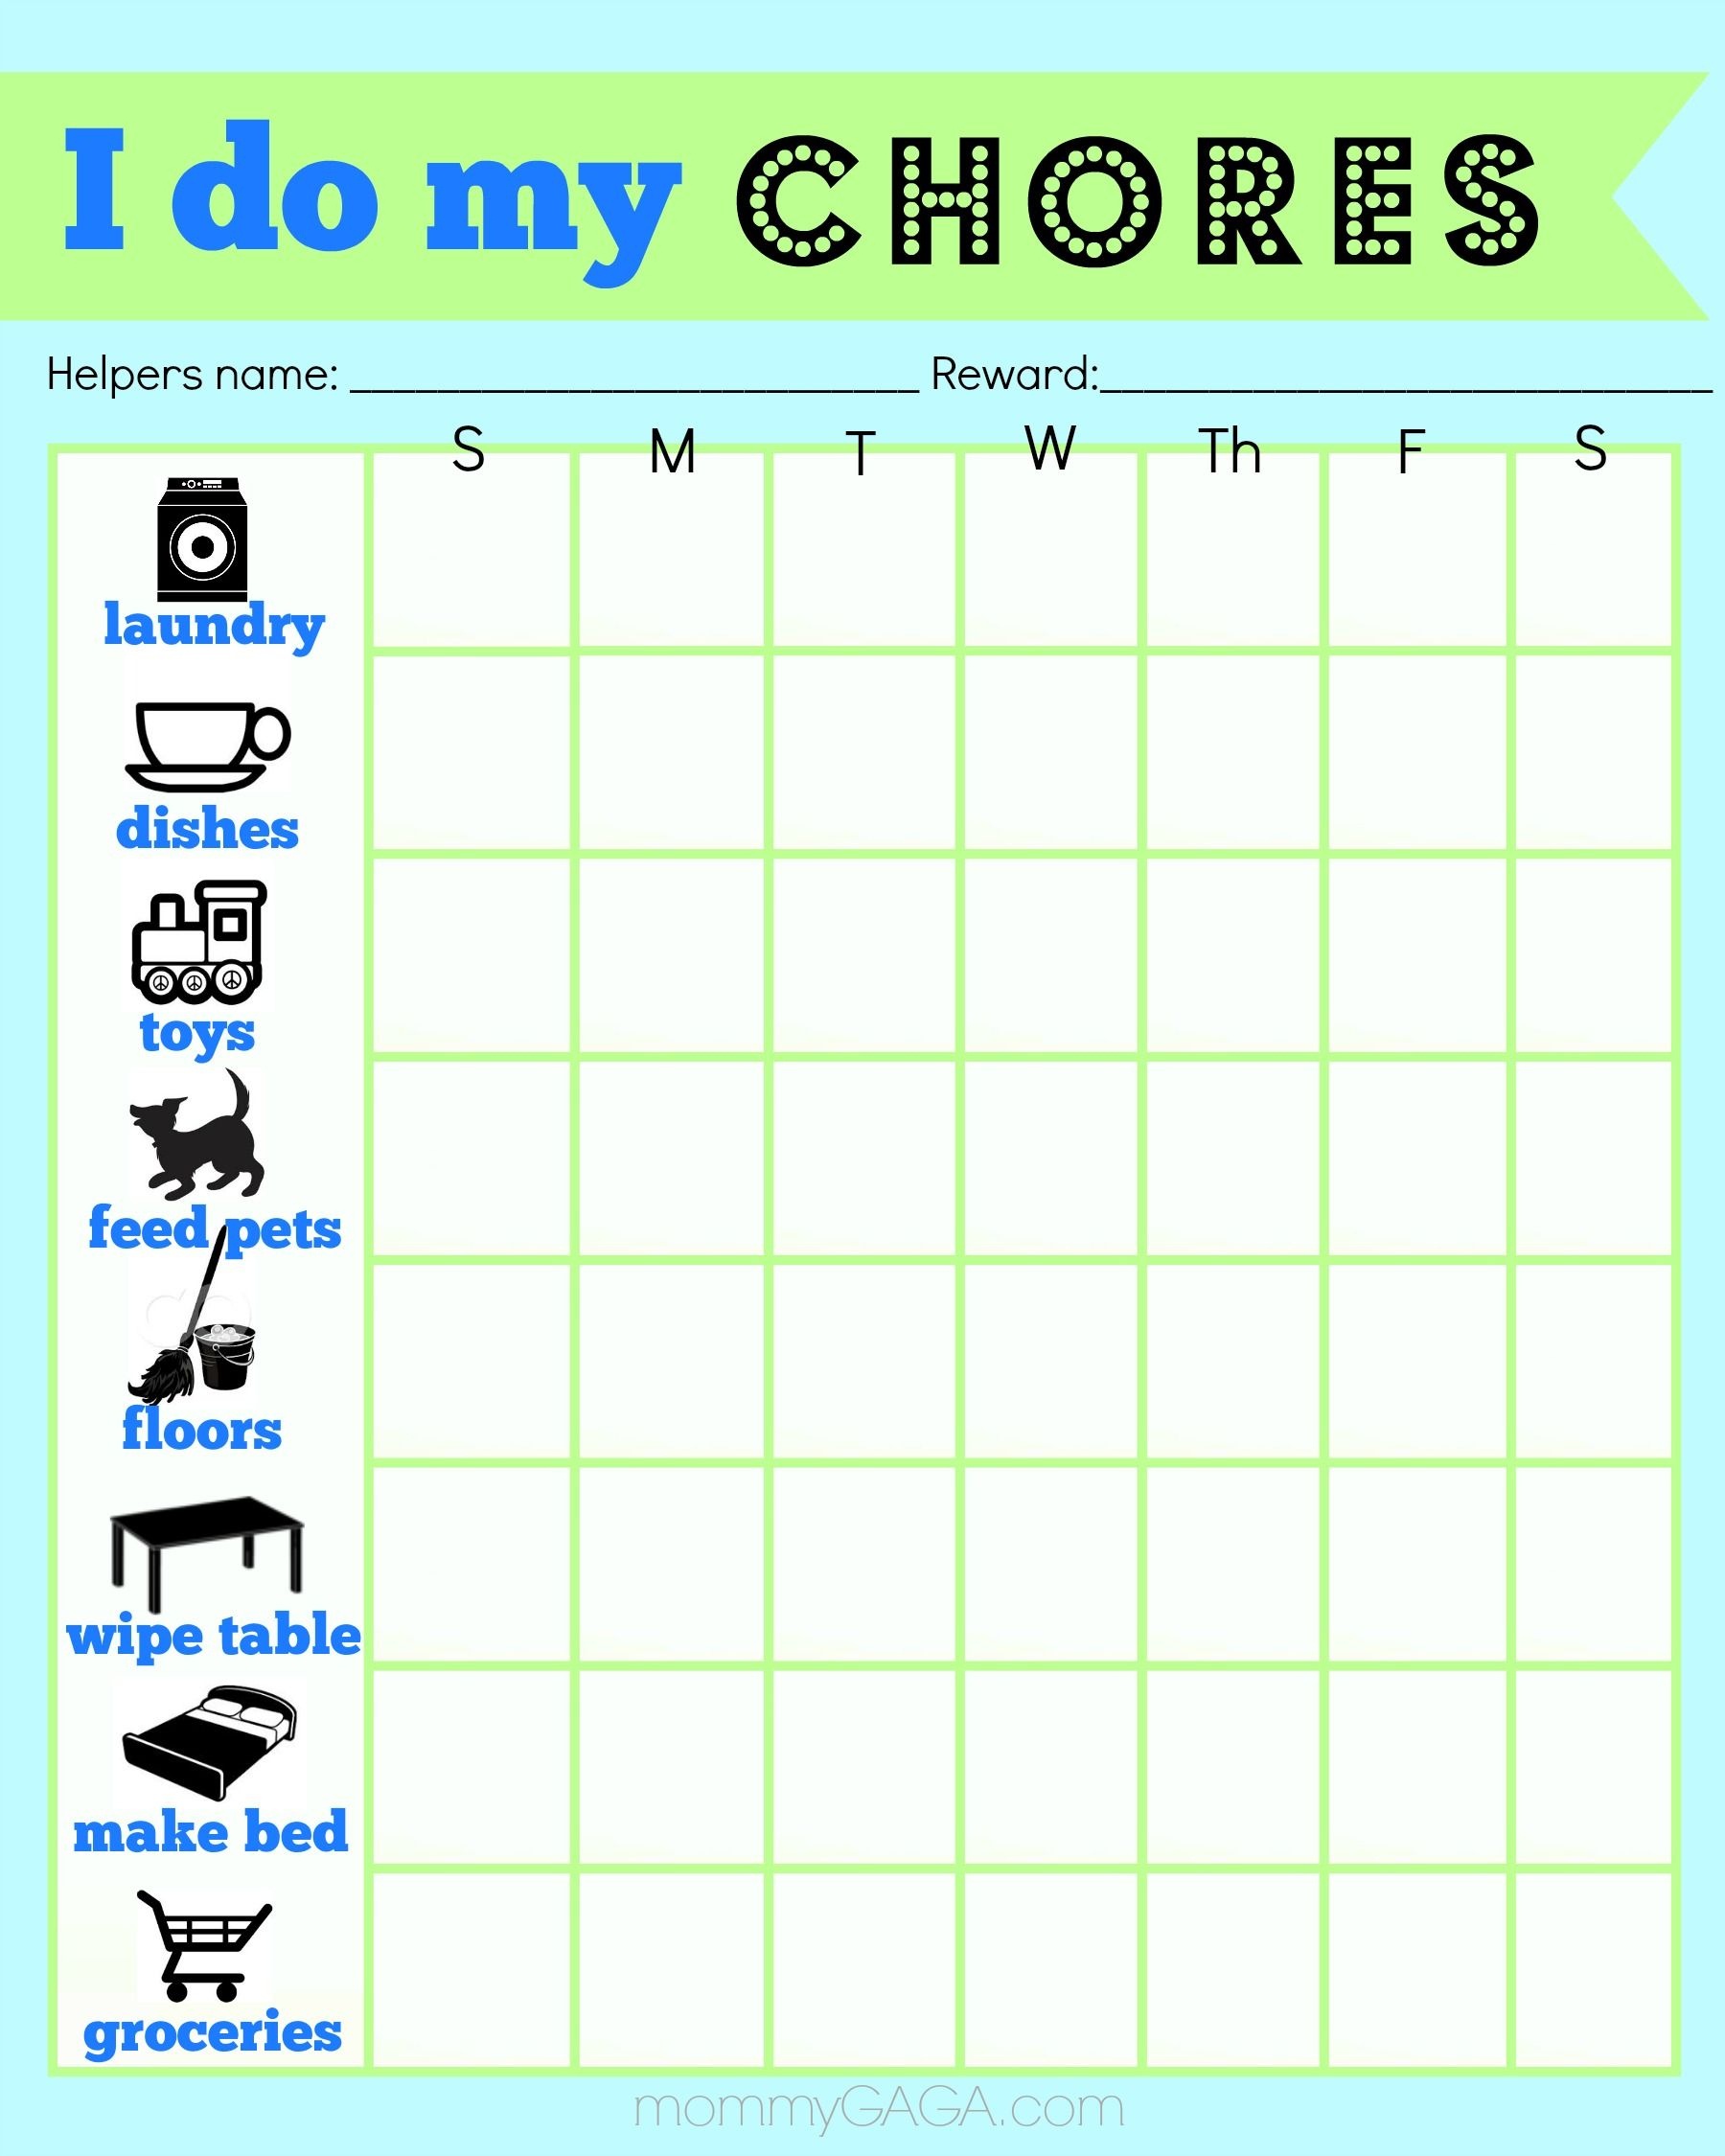 10 Chores For Preschoolers + A Printable Chore Chart | !! Top - Free Printable Chore Charts For 10 Year Olds